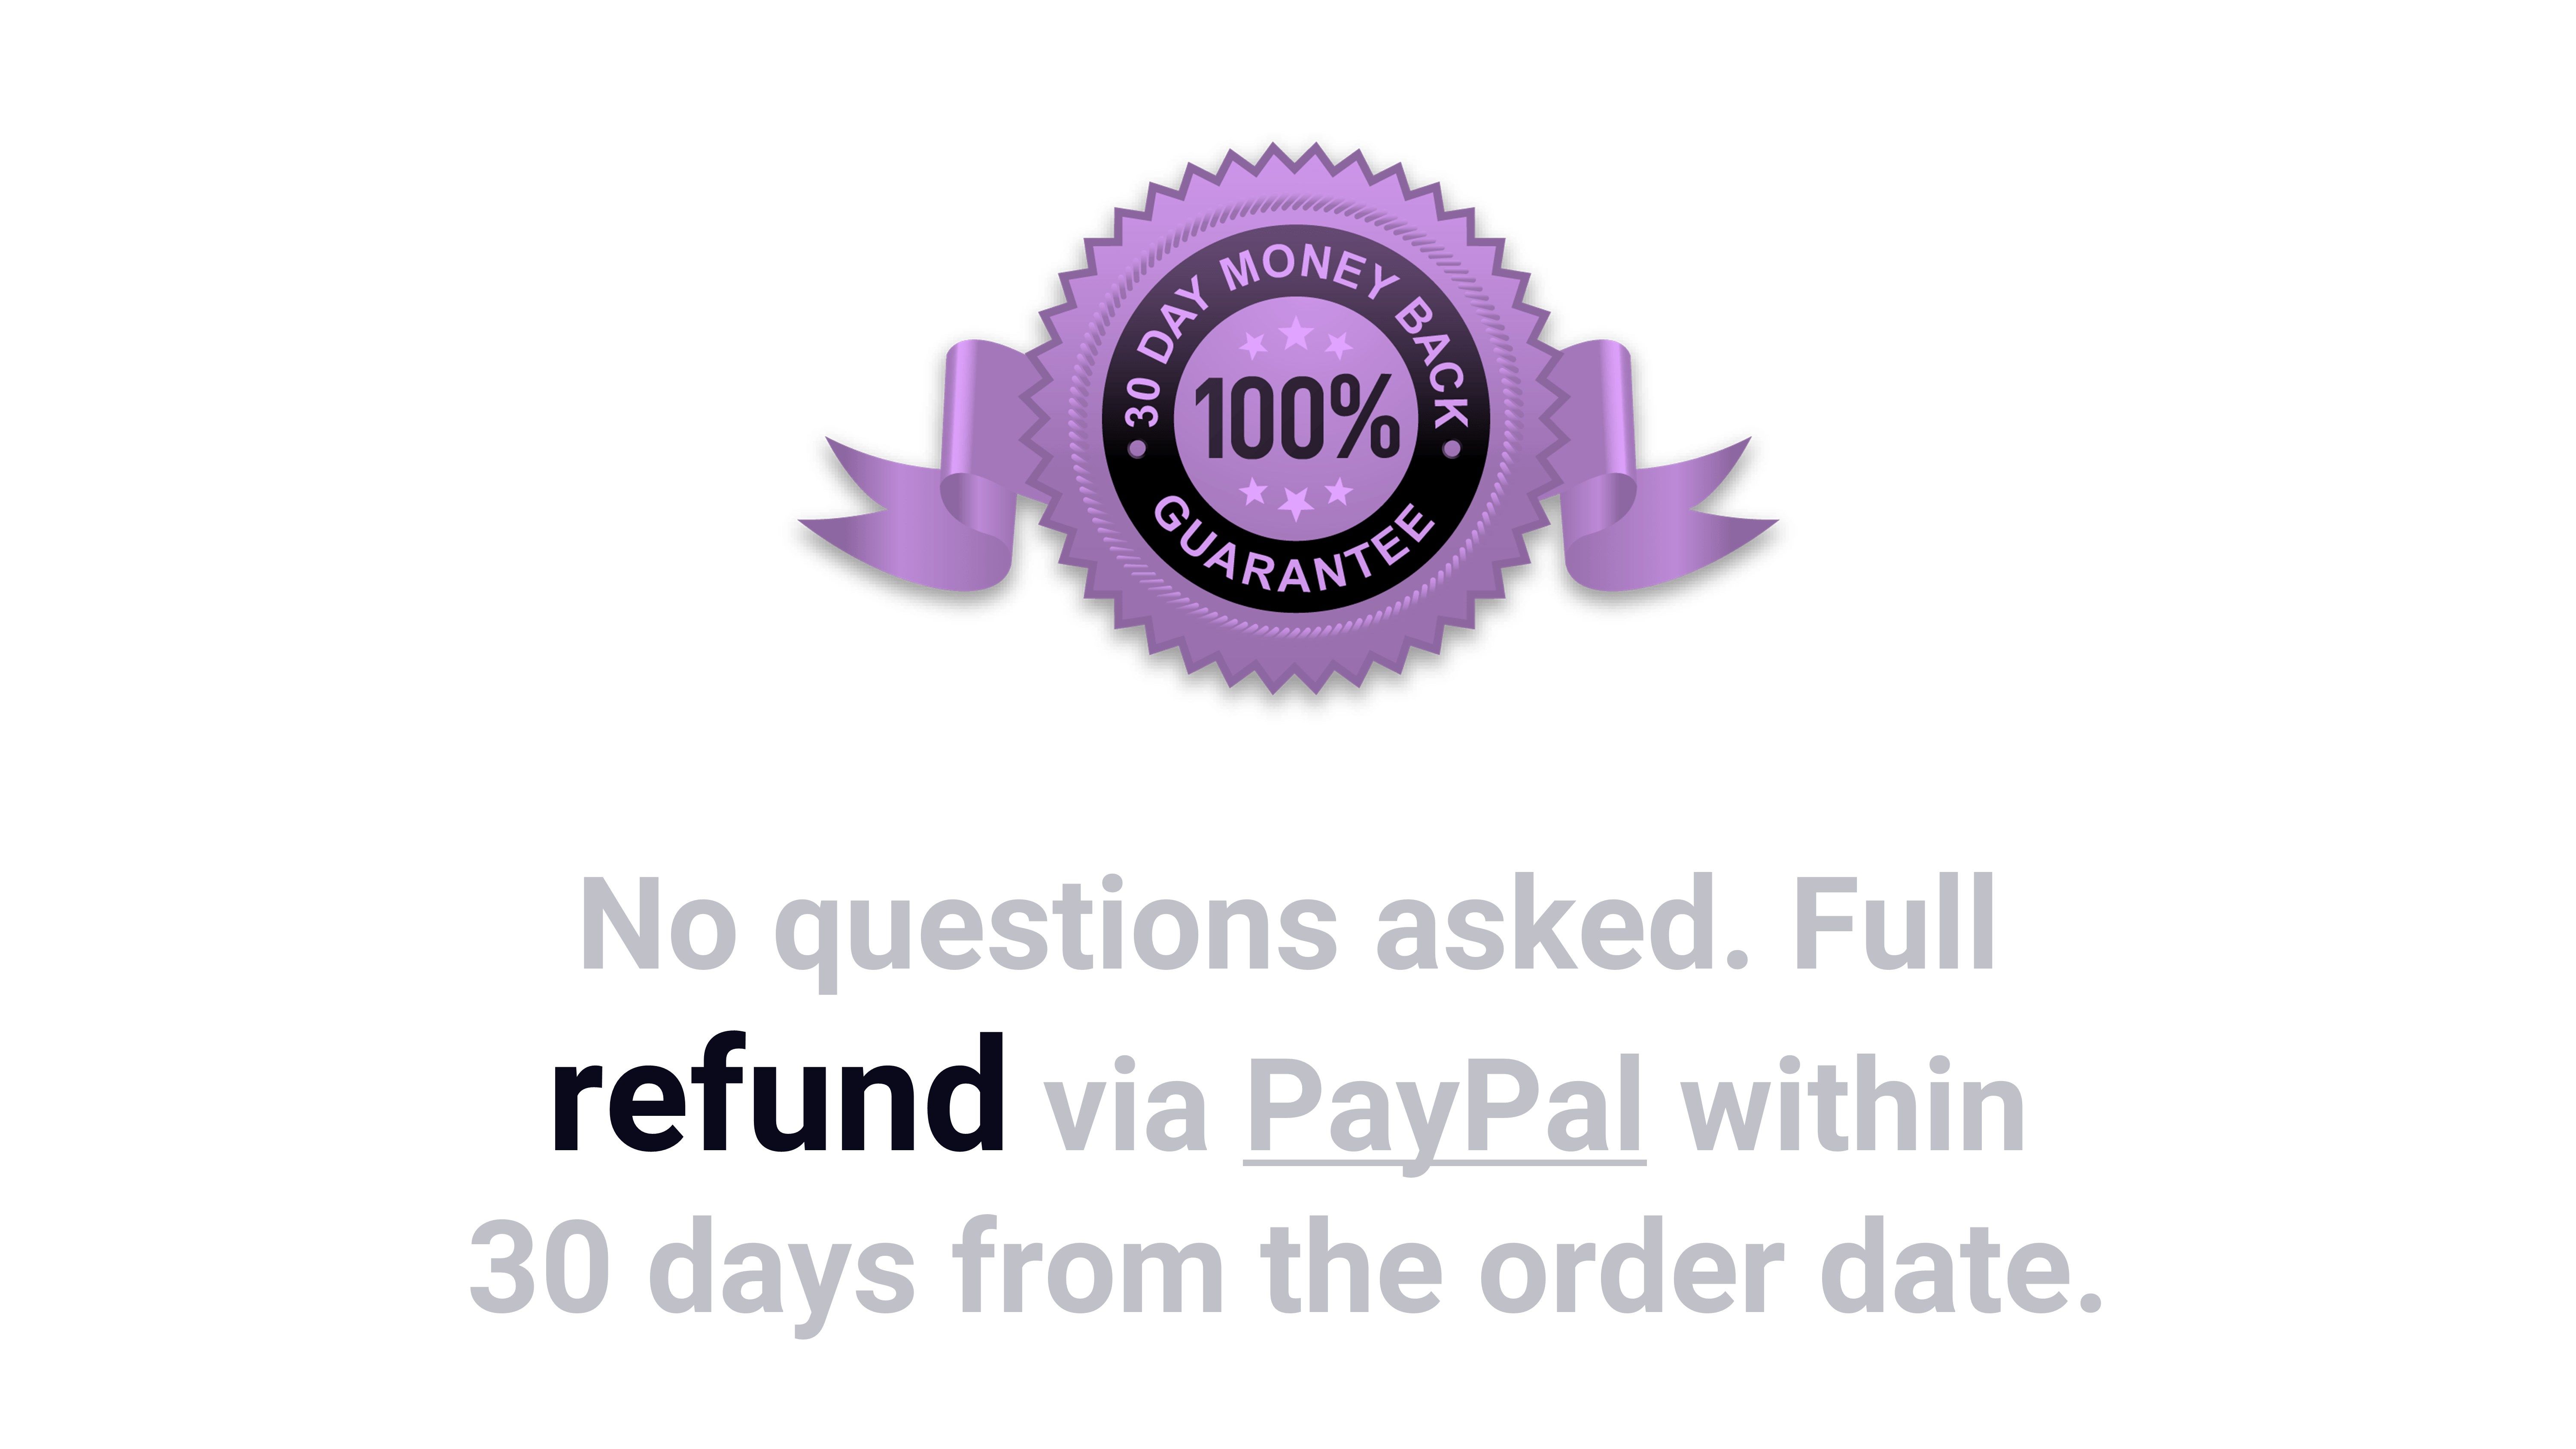 Full refund via PayPal